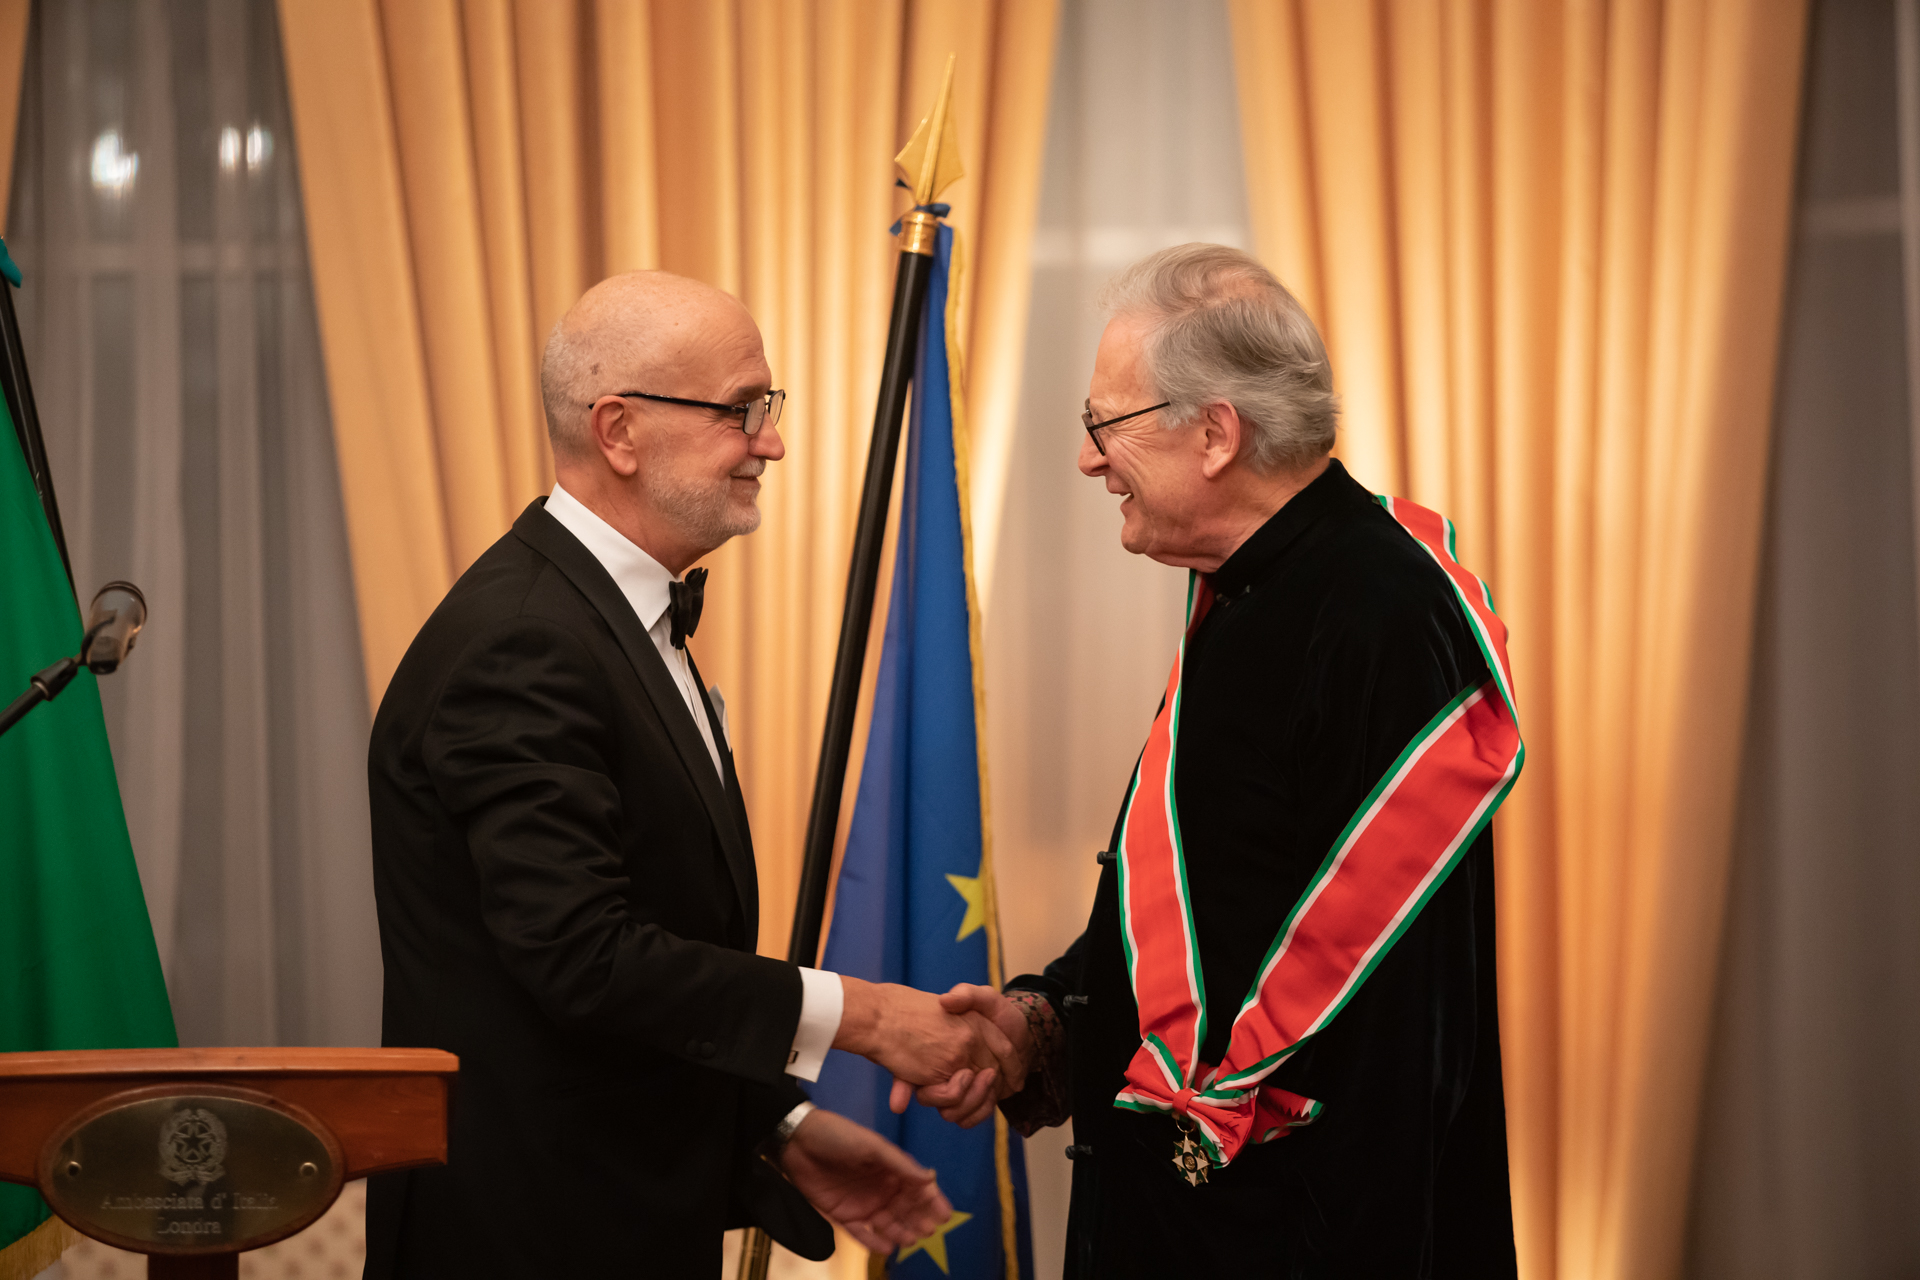 Sir John Eliot Gardiner and the Ambassador of Italy, Inigo Lambertini © Nick Rutter